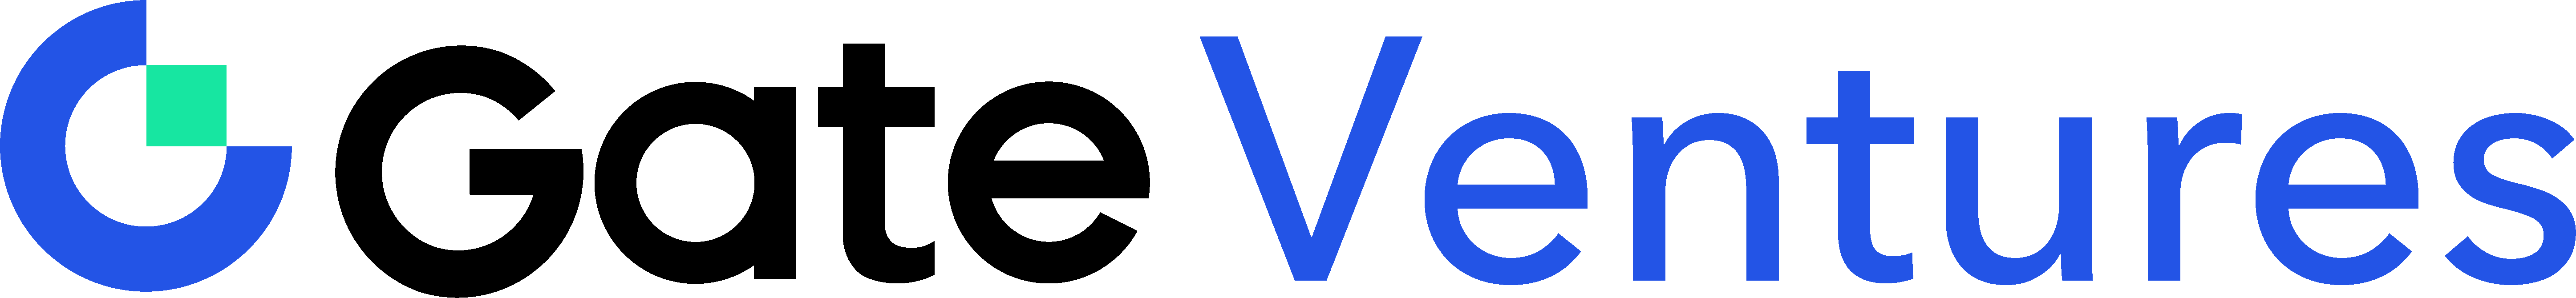 gate ventures logo